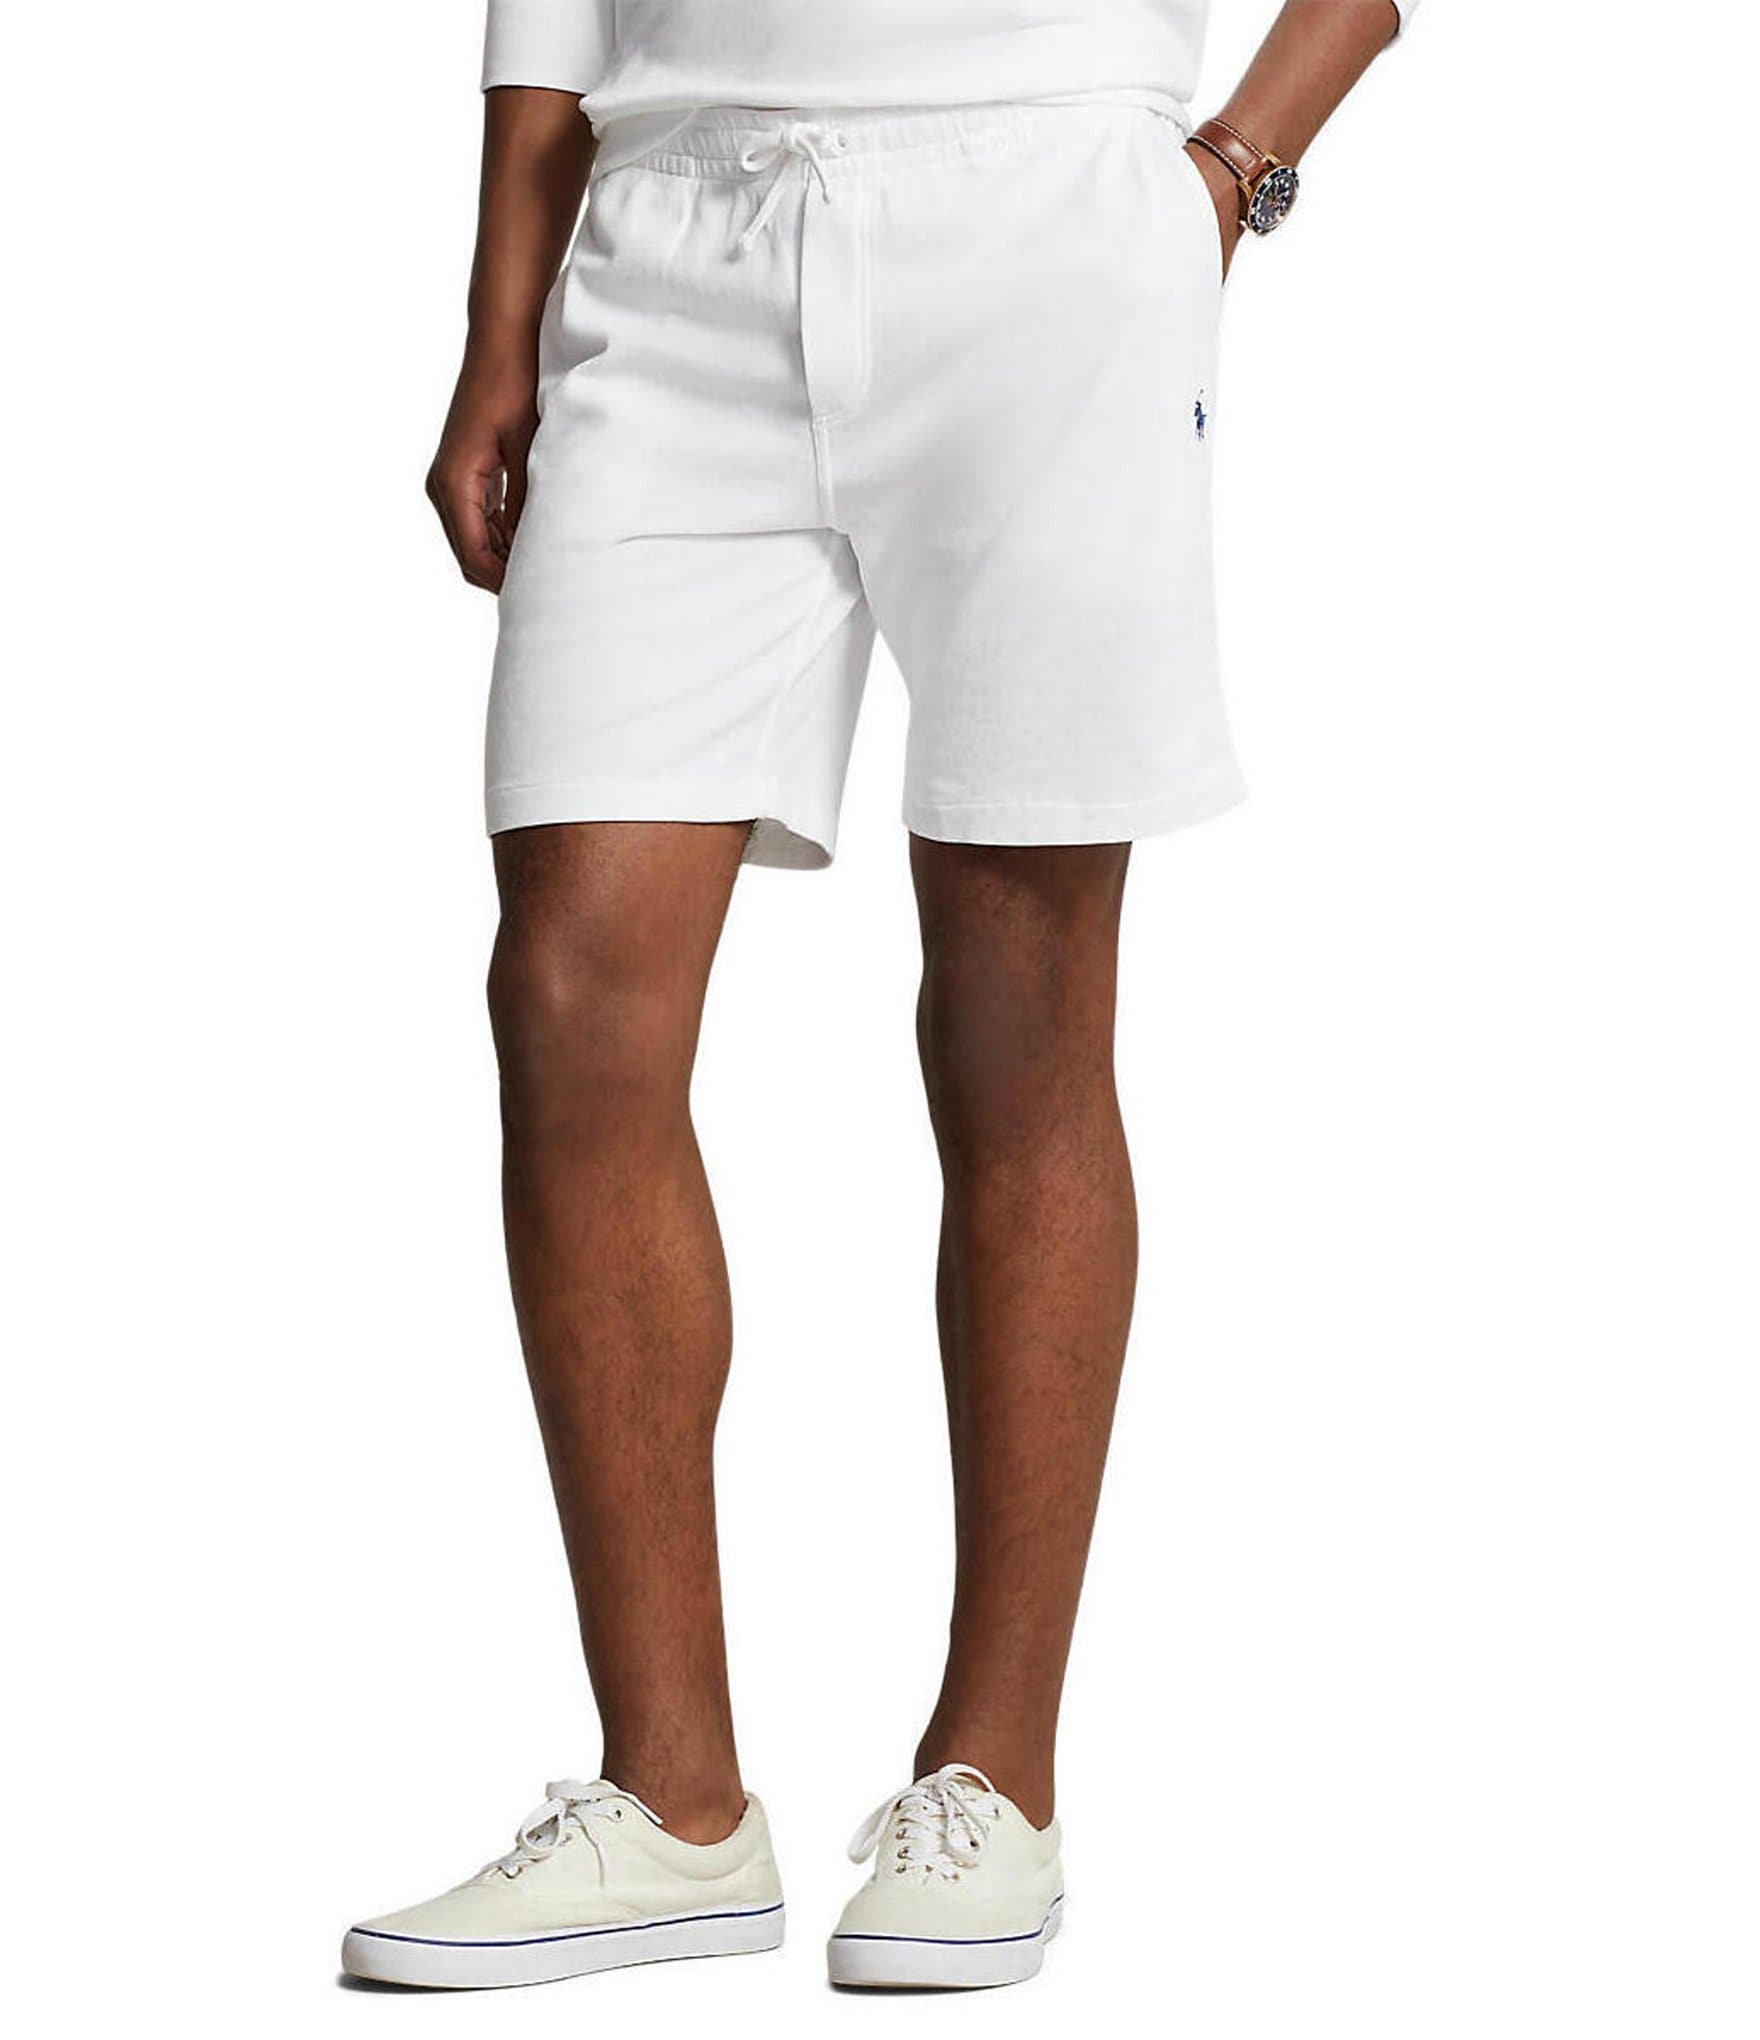 Polo Ralph Lauren Mens Athletic Shorts (Large, White) 